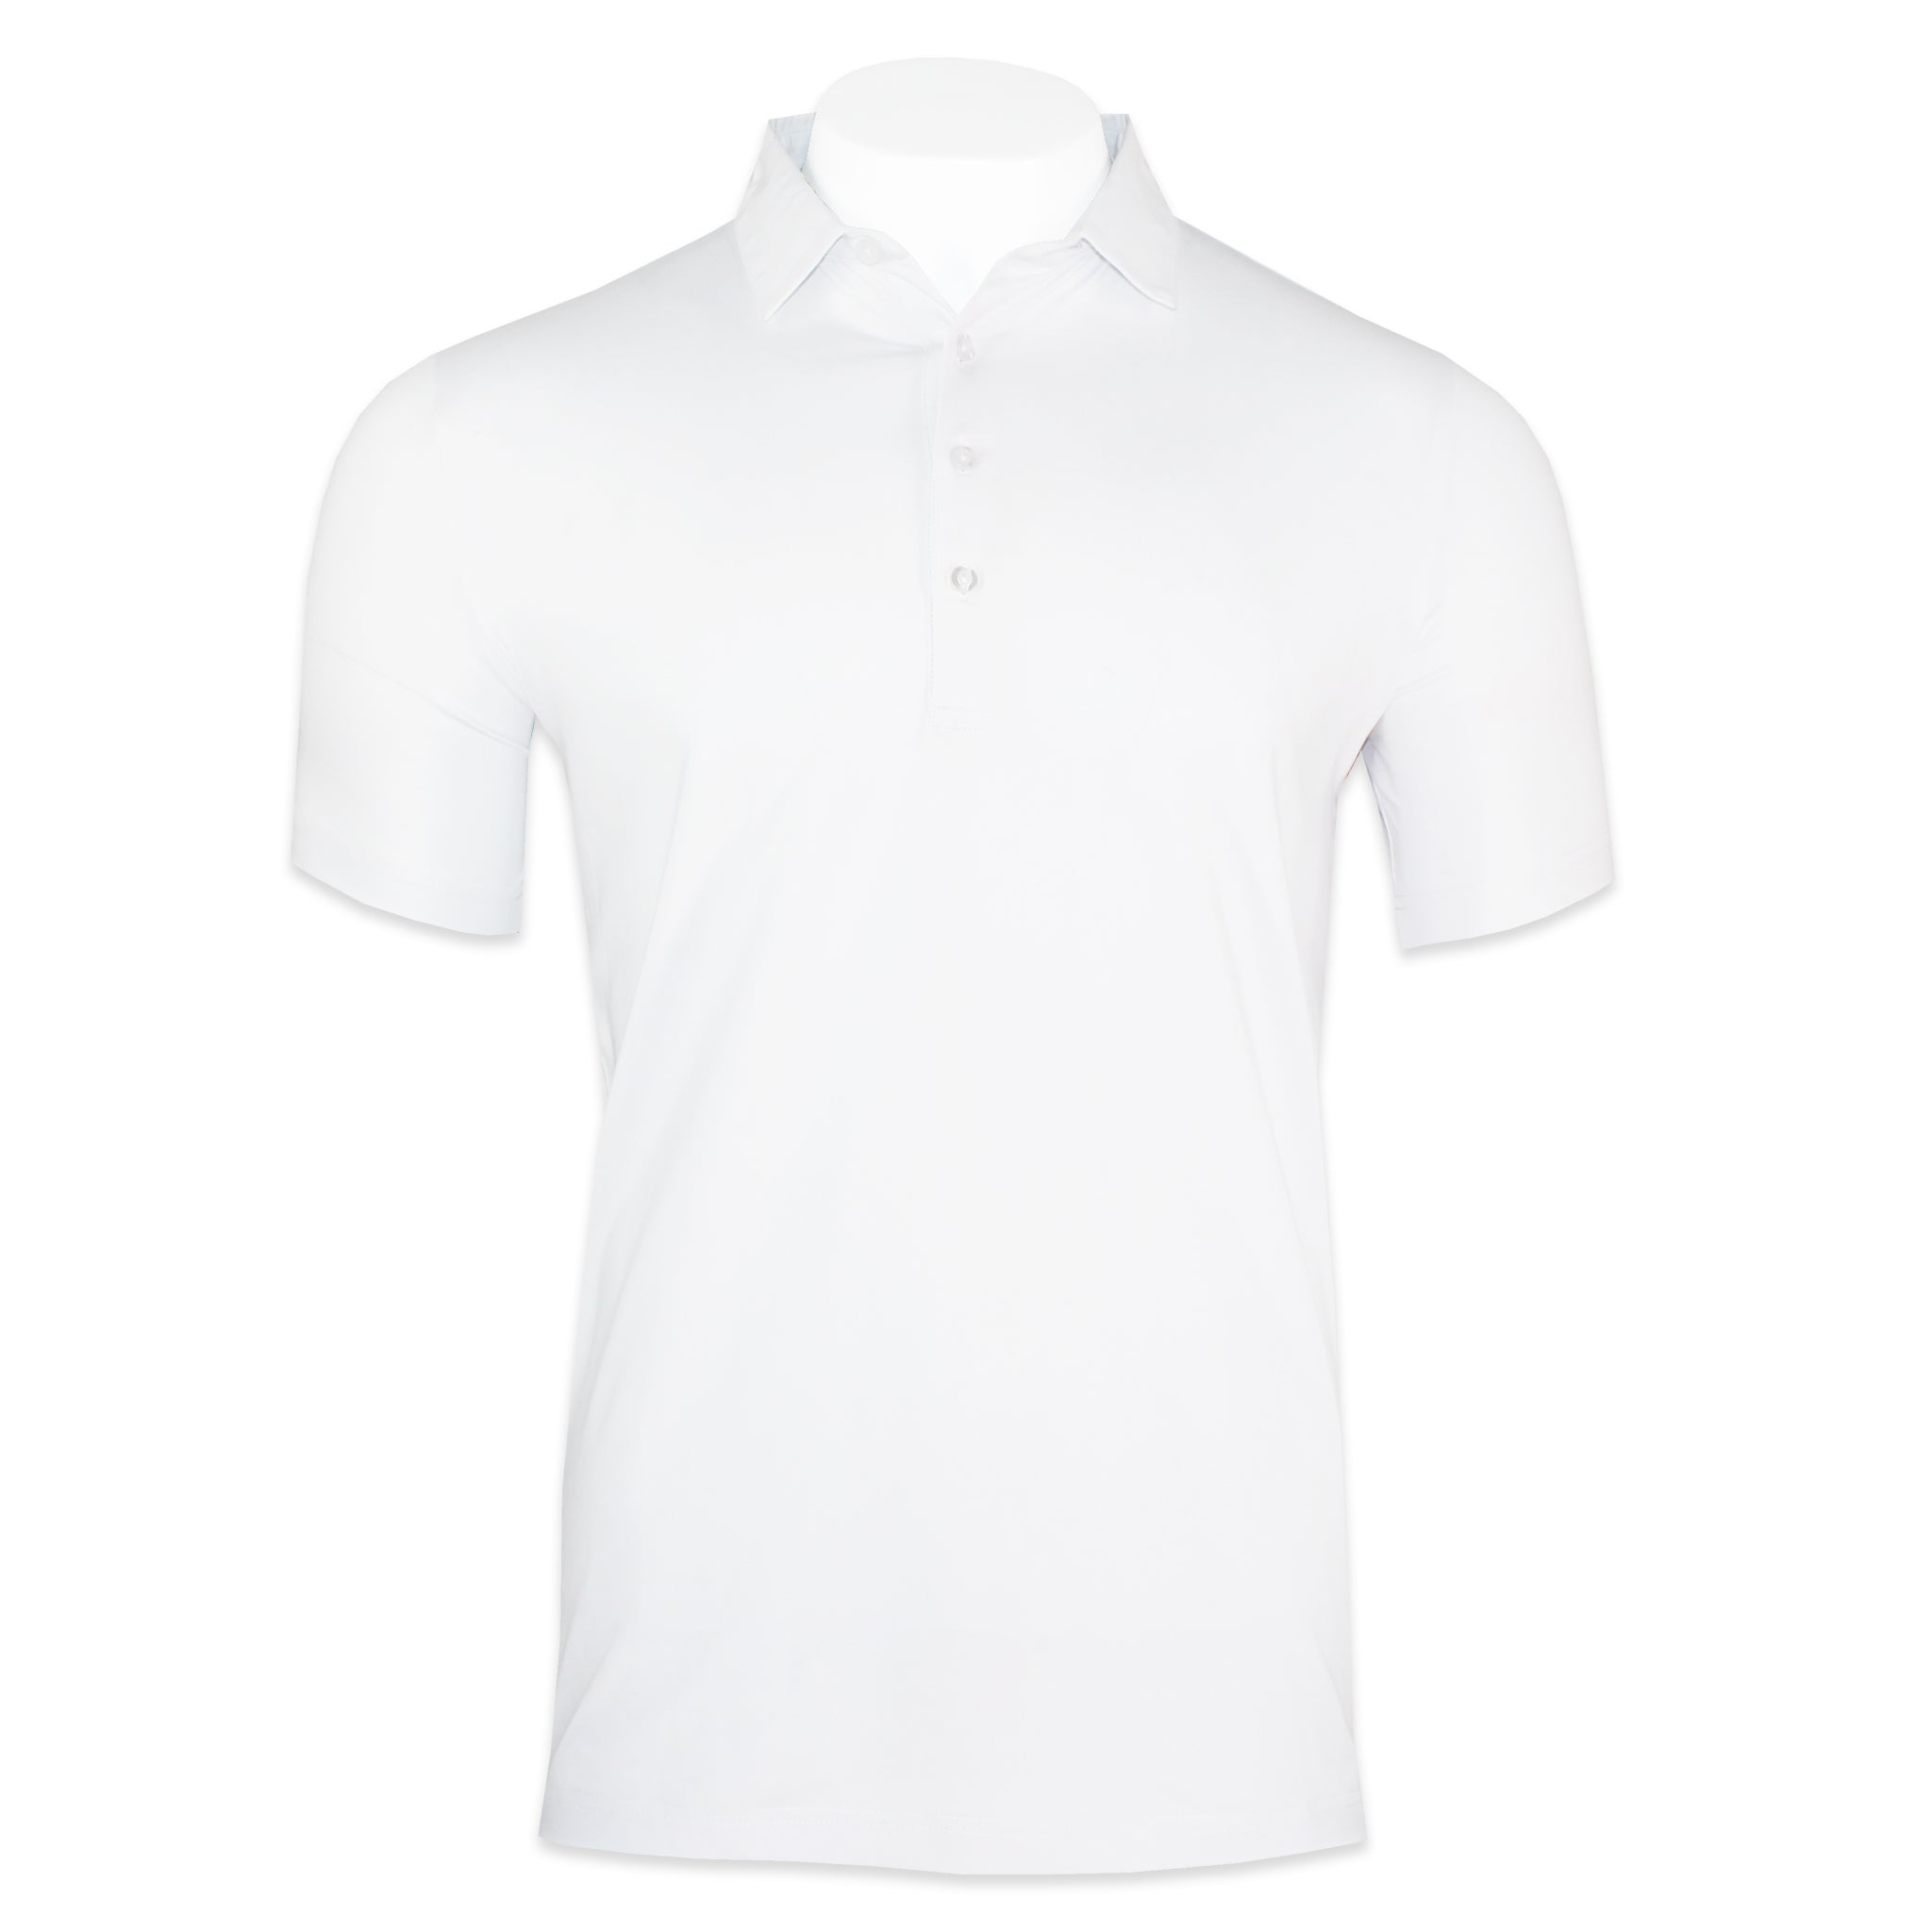 'White' Four Button Golf Shirt